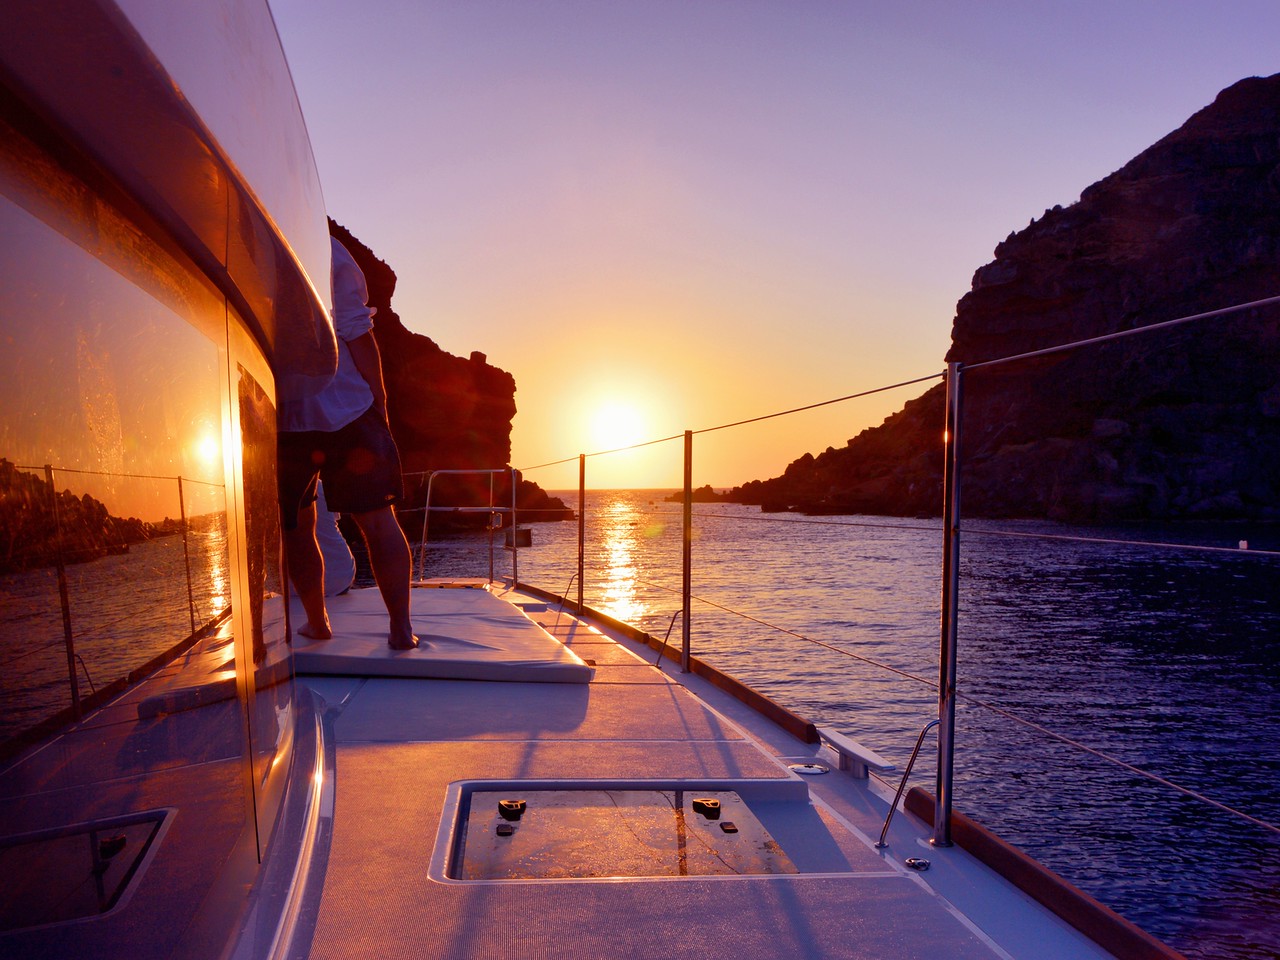 Semi Private Romantic Sunset Cruise